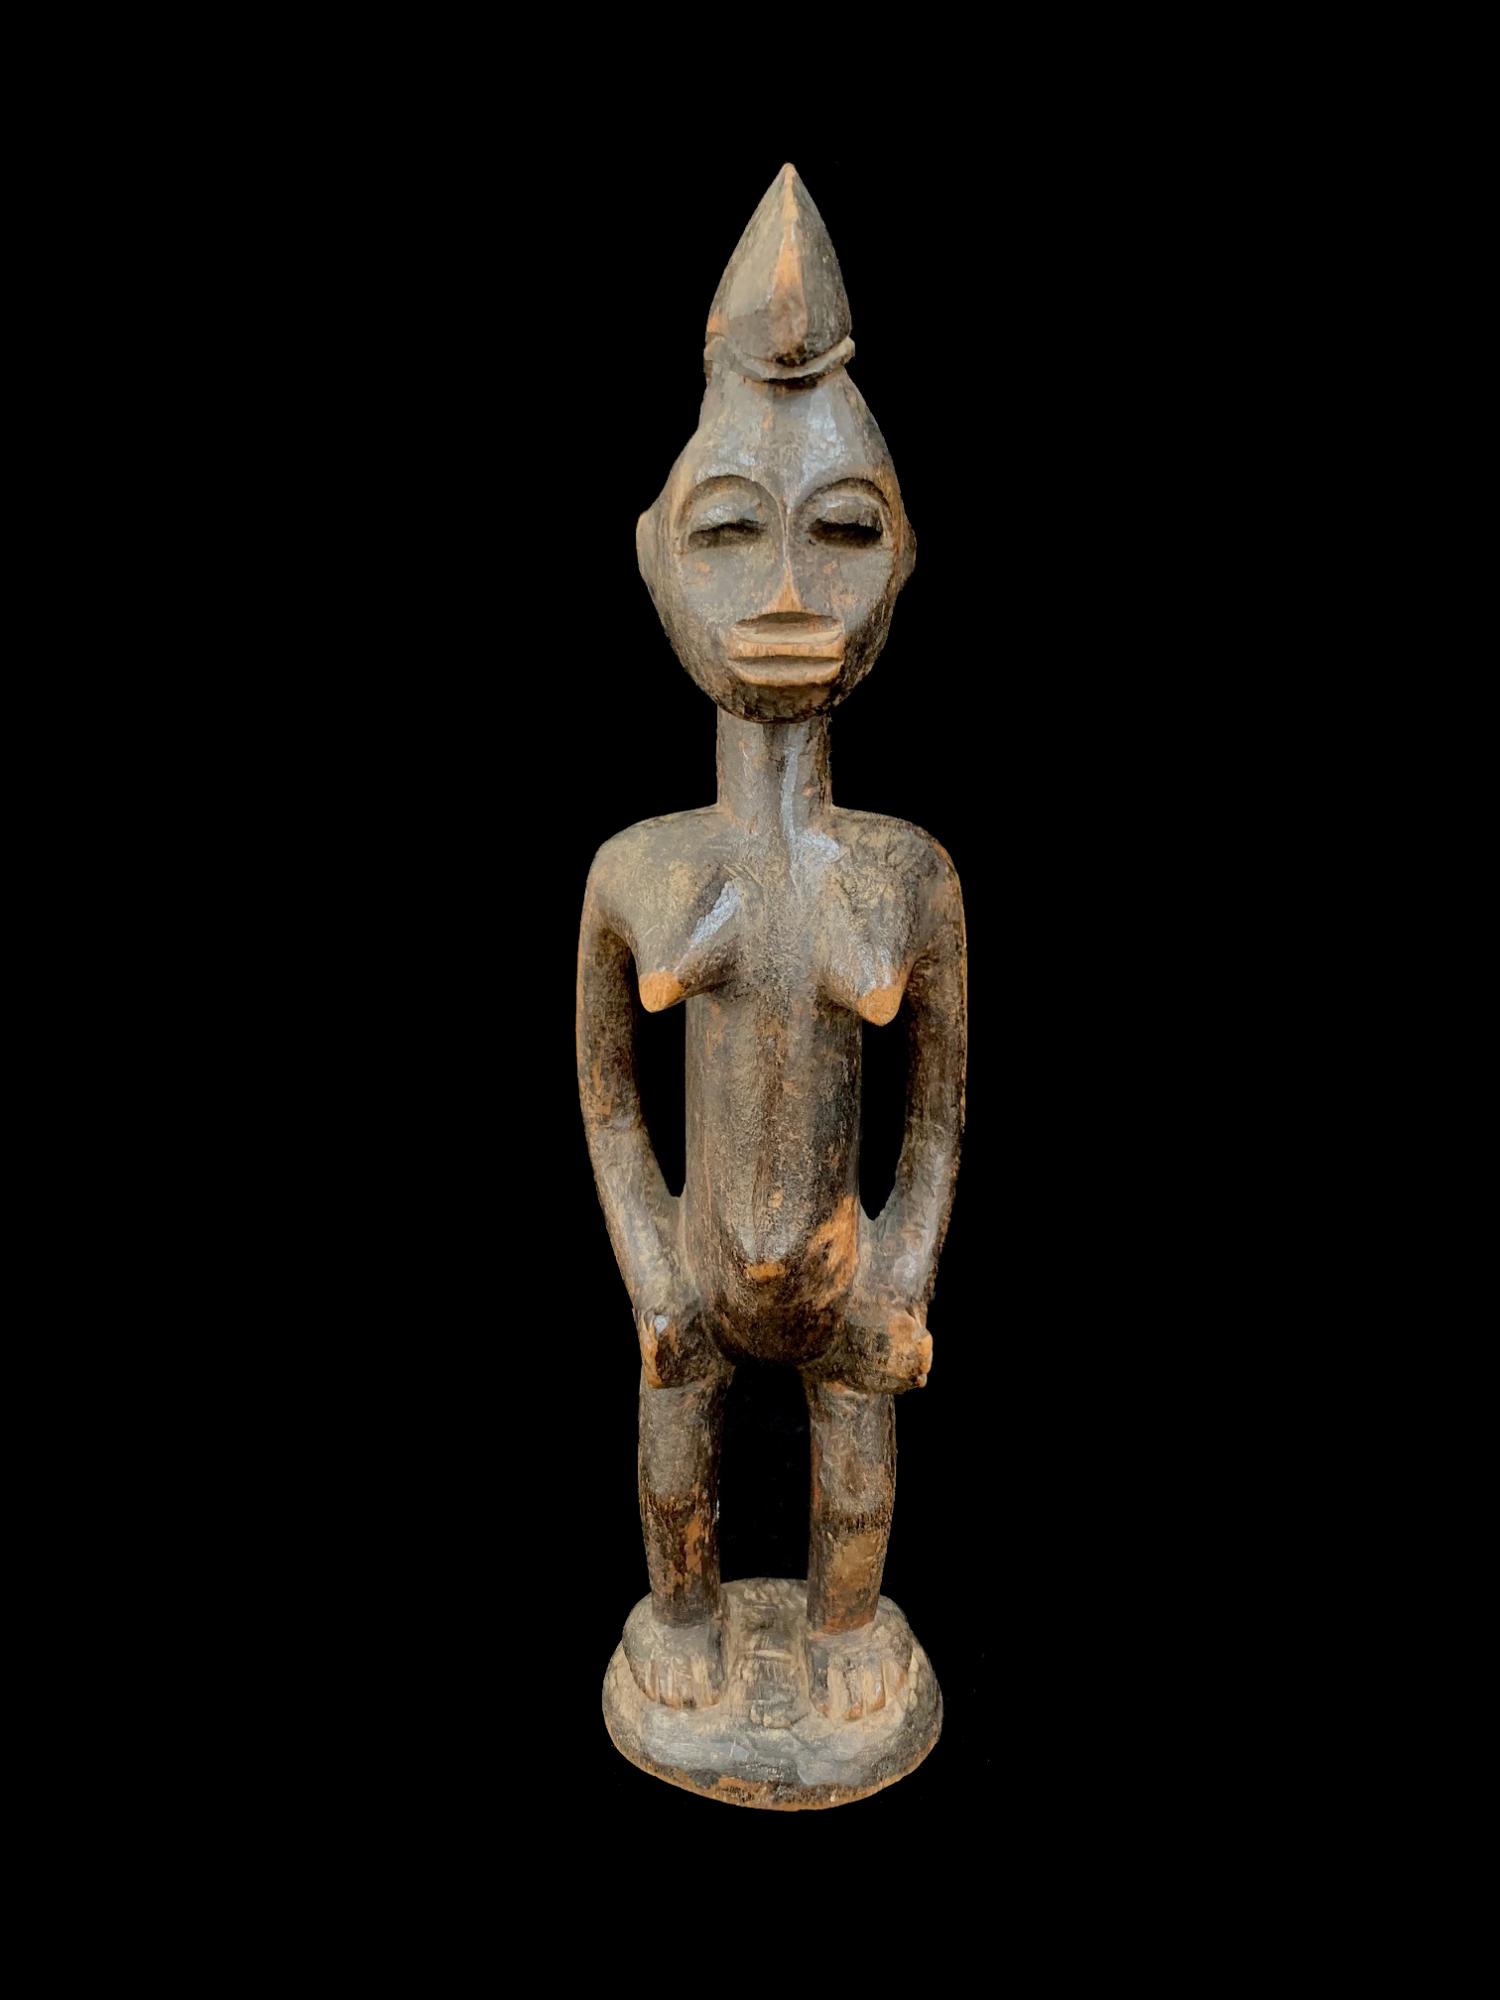 Divination Figure 'Deble' - Senufo, Ivory Coast (JL8)